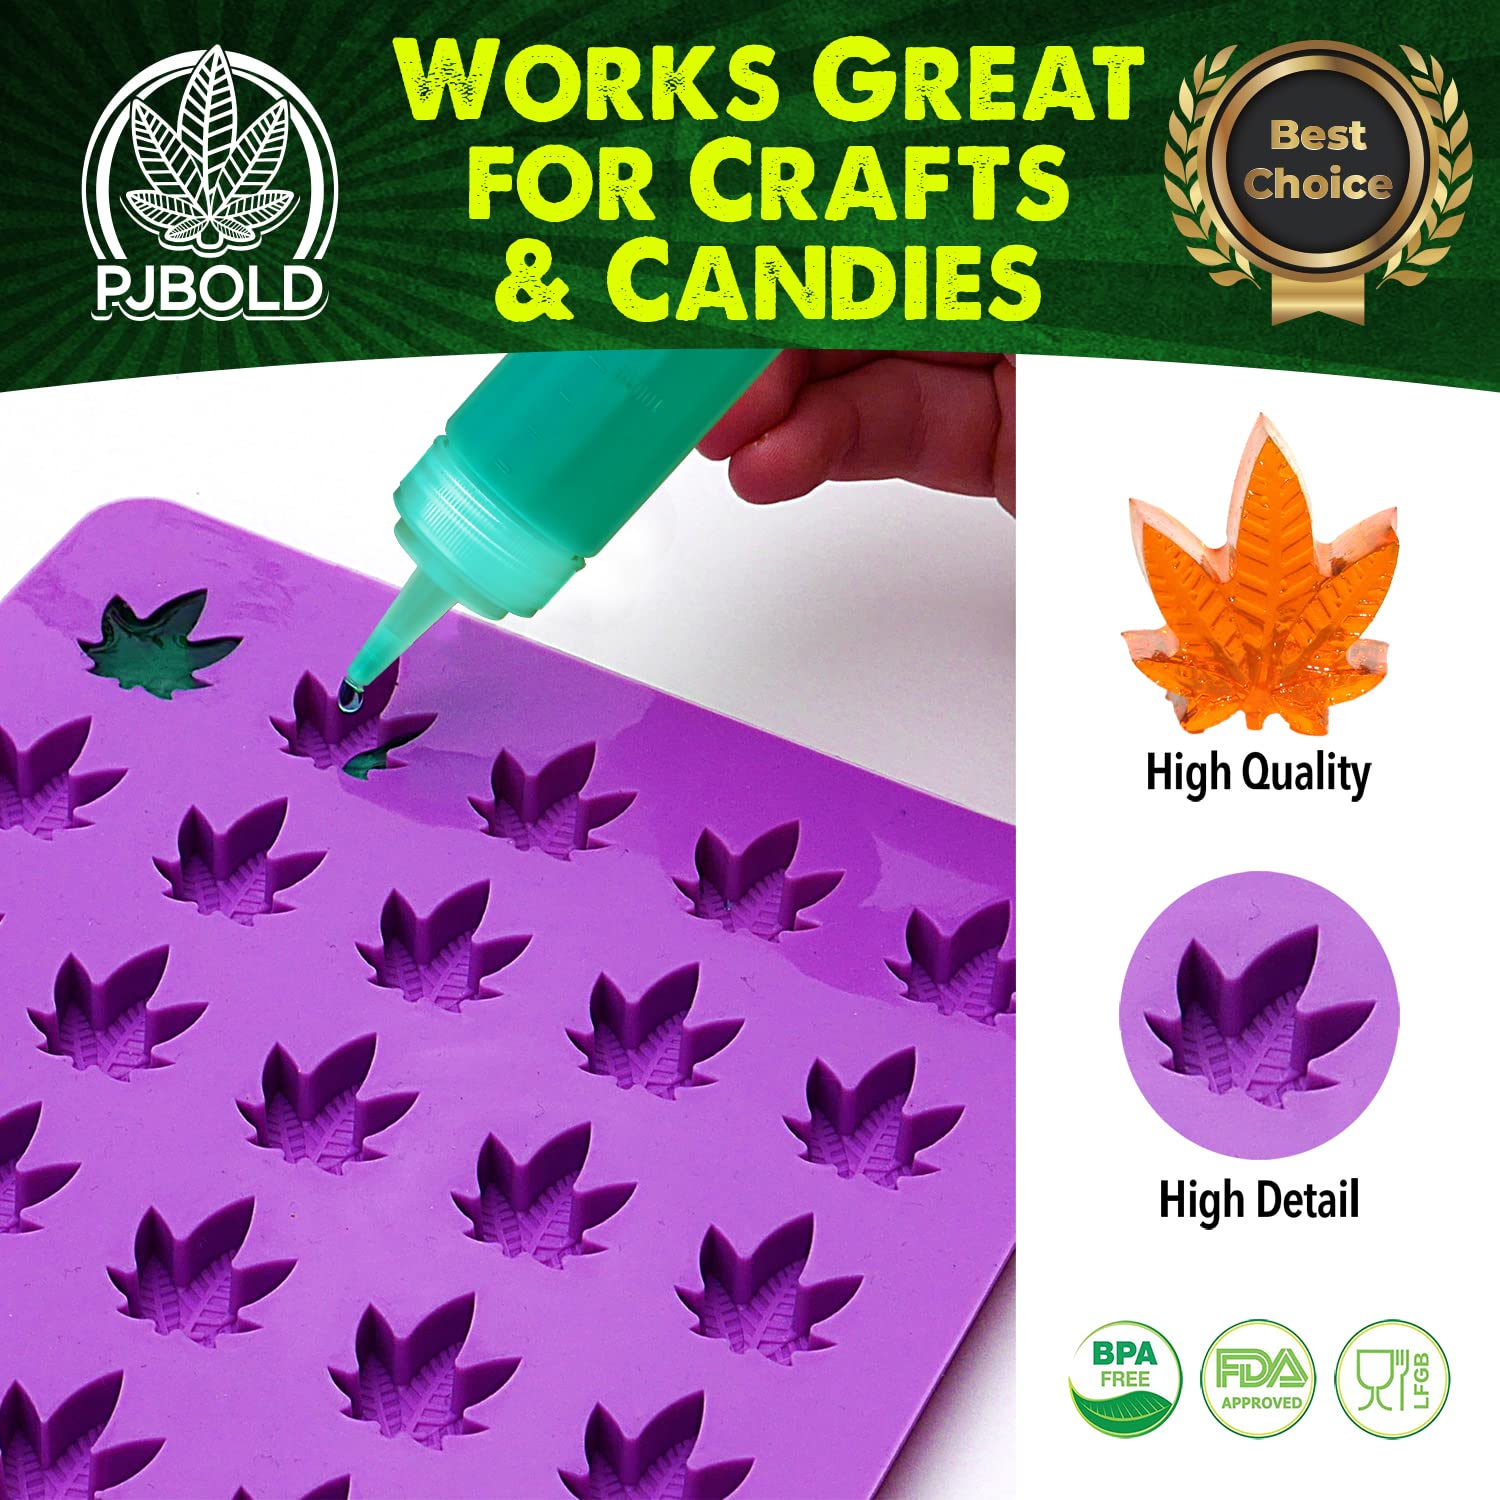 PJ BOLD Marijuana Leaf Gummmy Silicone Candy Mold, 3 Pack with Bottle